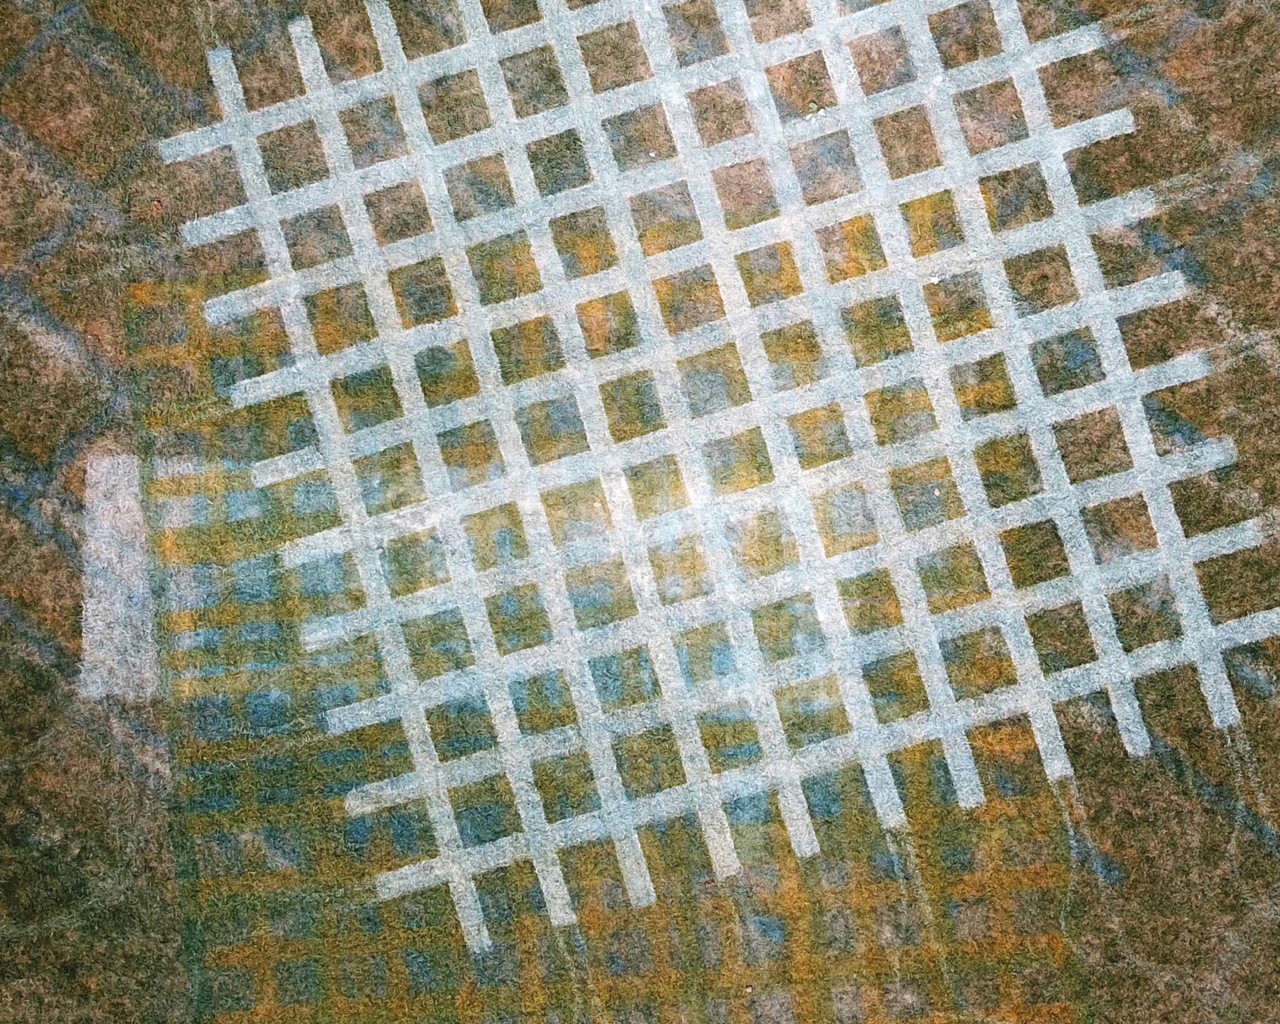 grid pattern on grass